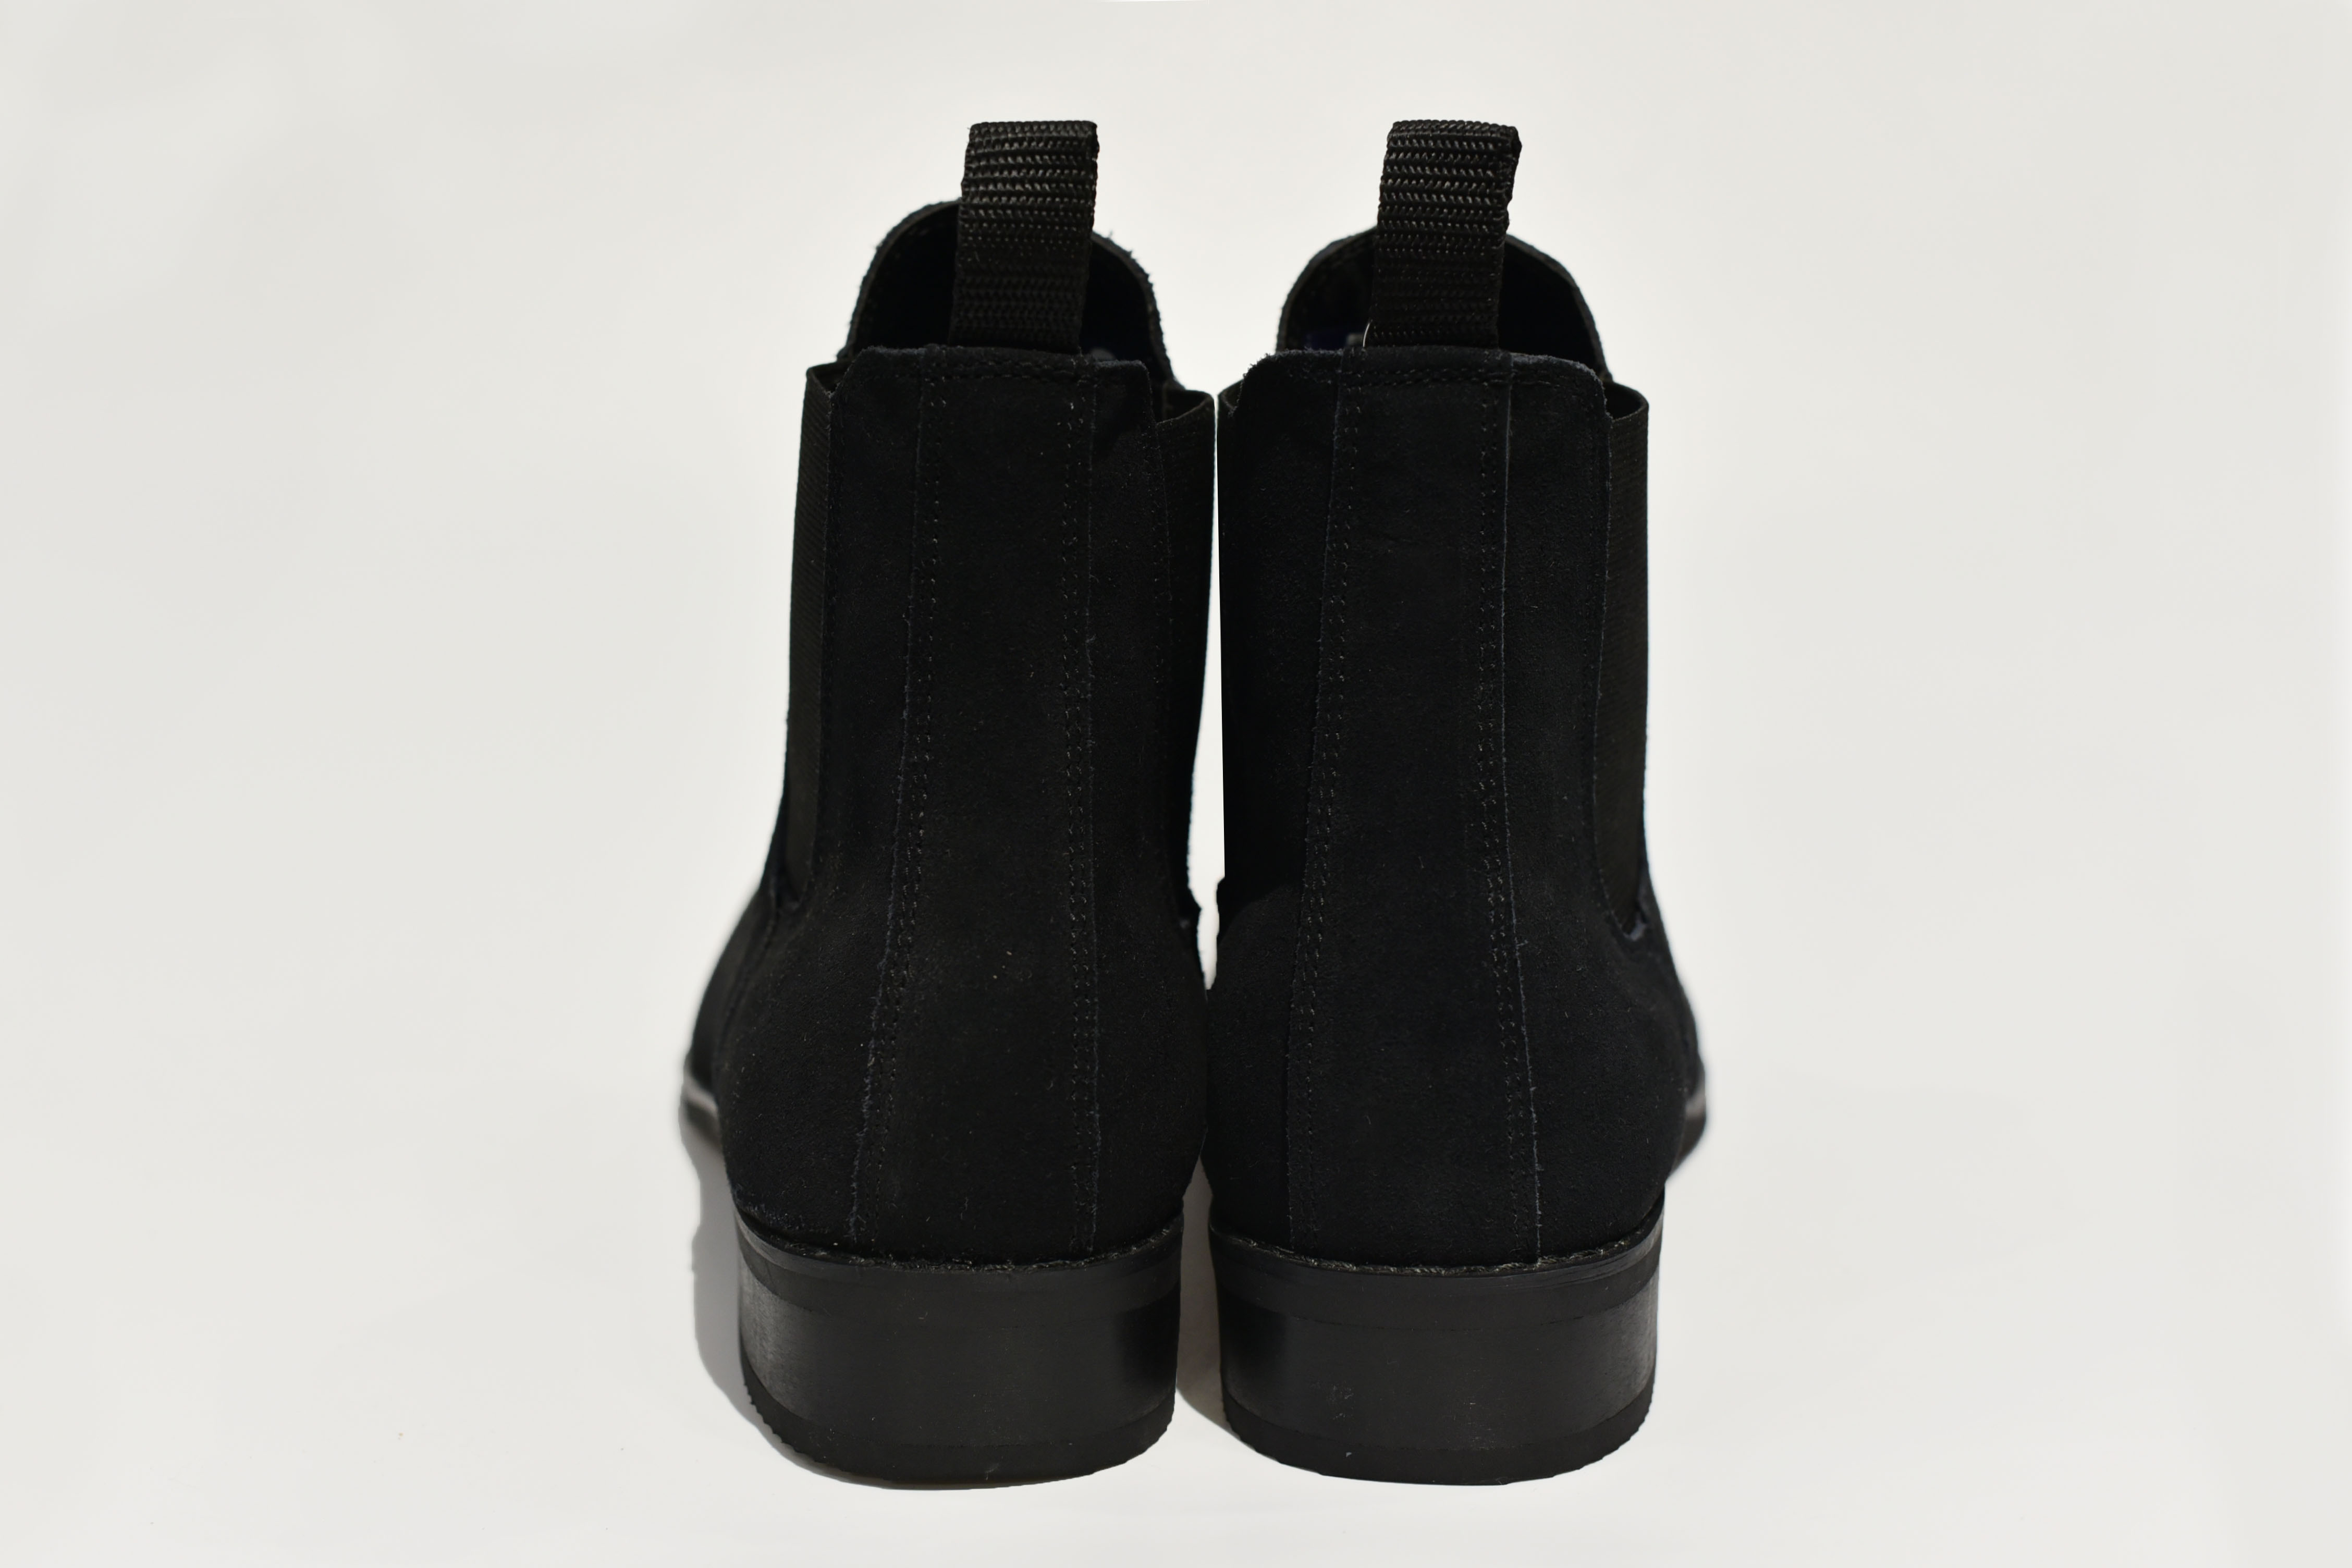 Giày Chelsea boot nam màu đen da lộn Revision 2 TFBKS8826 - Size